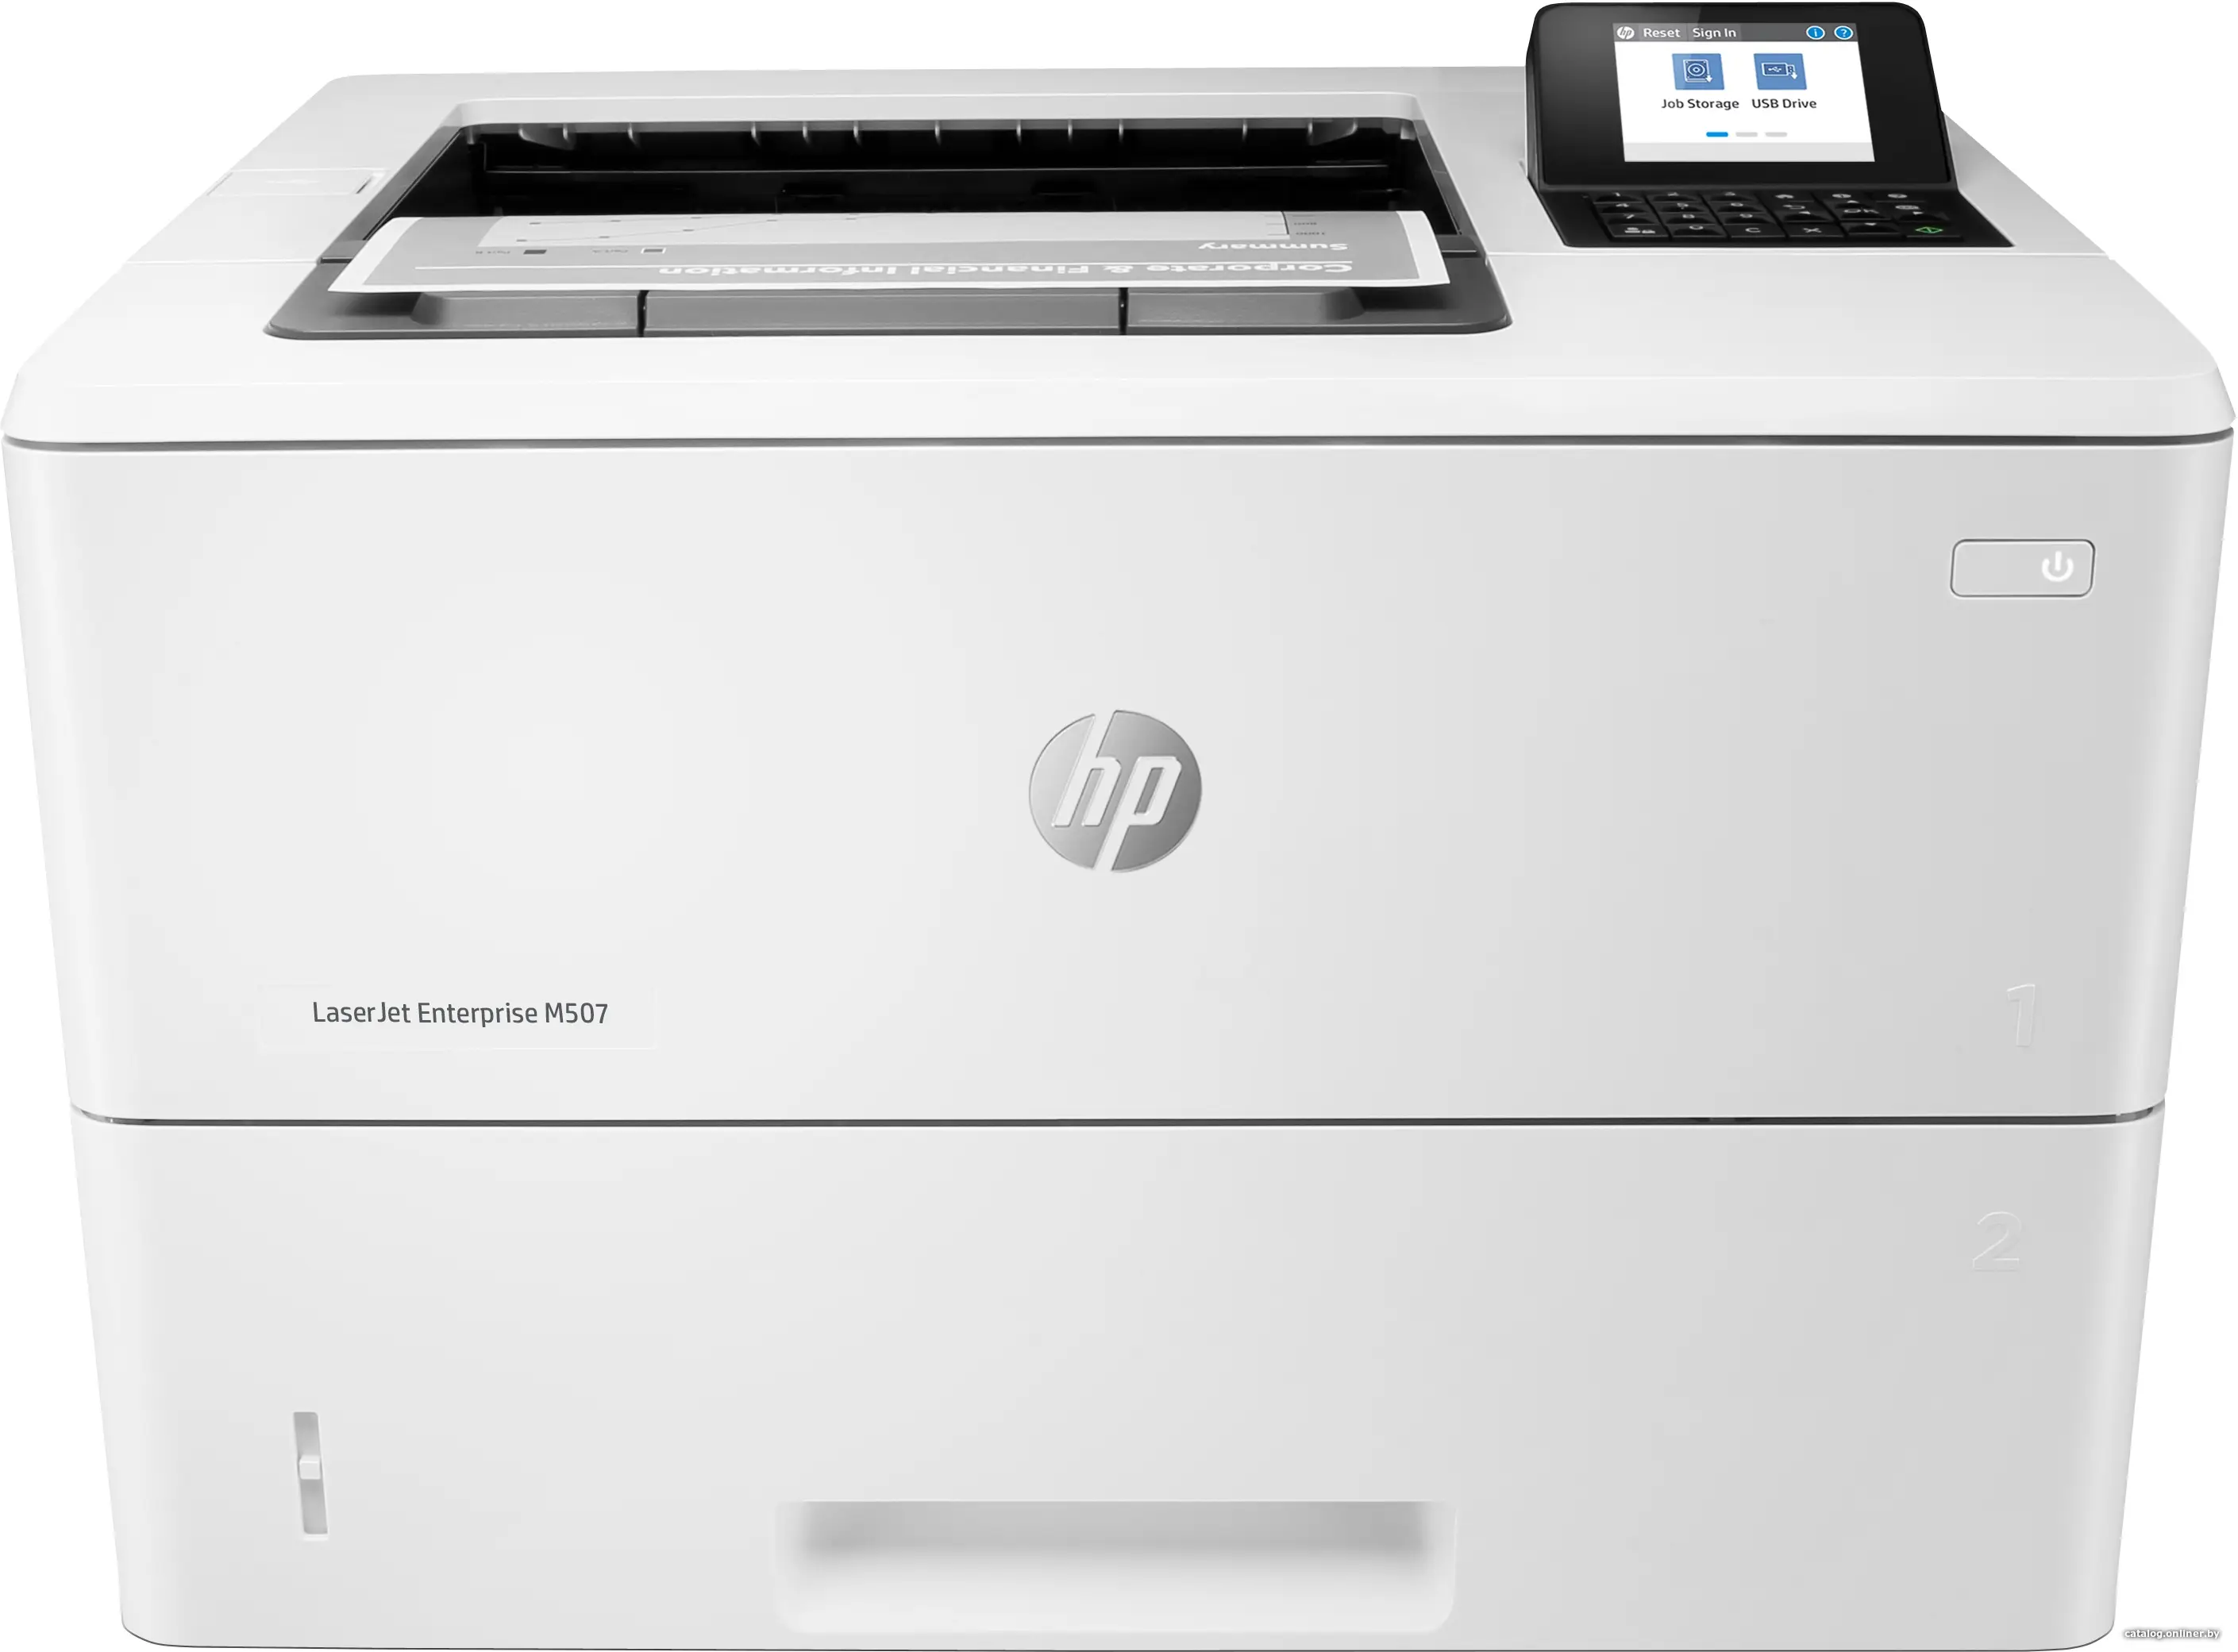 Купить Принтер HP LaserJet Enterprise M507dn (1PV87A), цена, опт и розница